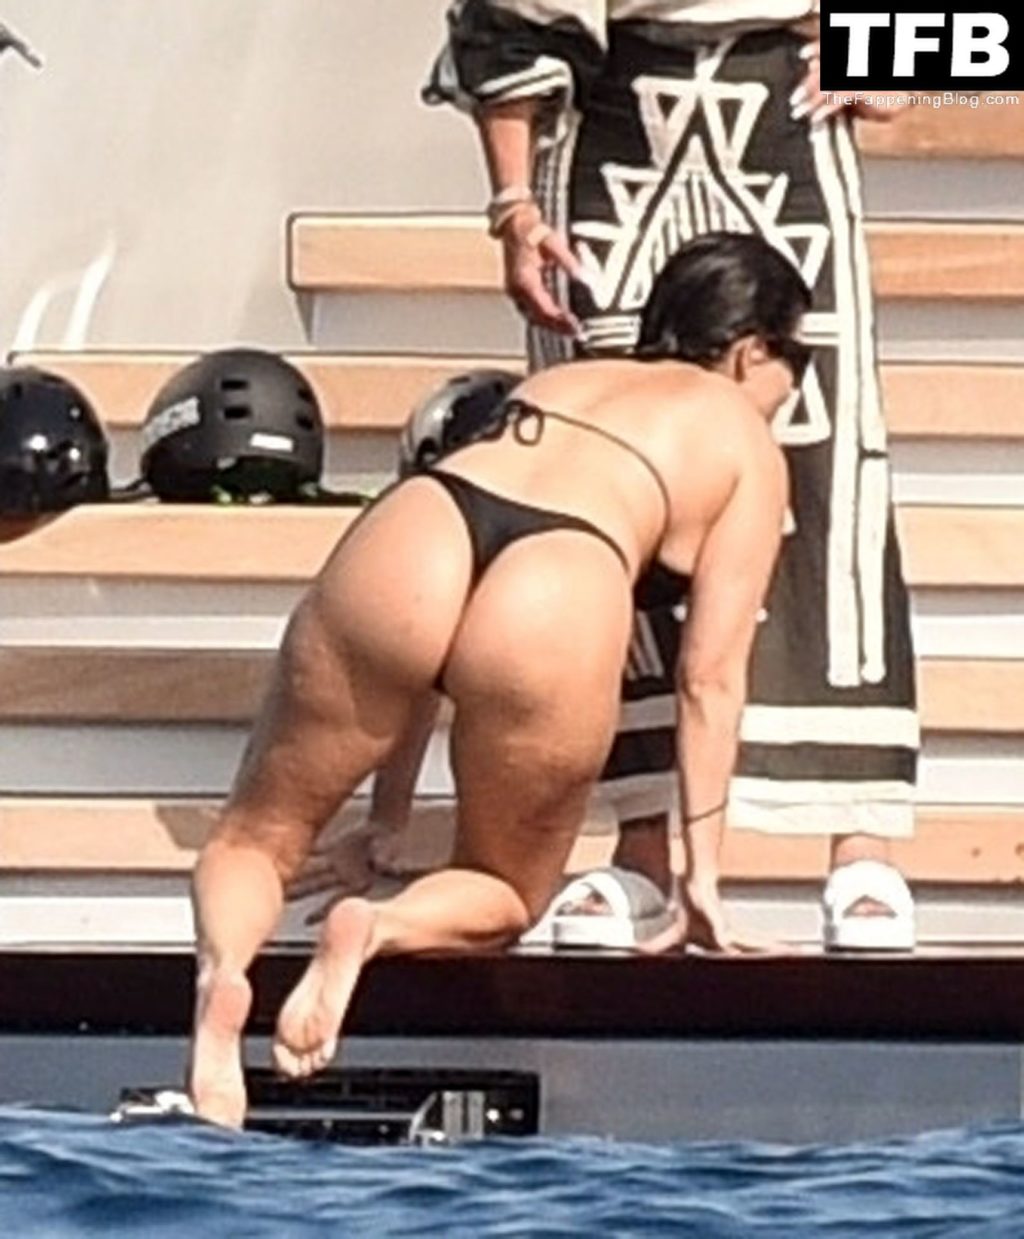 Kourtney Kardashian Sexy The Fappening Blog 2 1 1024x1239 - Kourtney Kardashian Shows Off Her Toned Bikini Body While Enjoying Some Quality Time with Travis Barker (48 Photos)